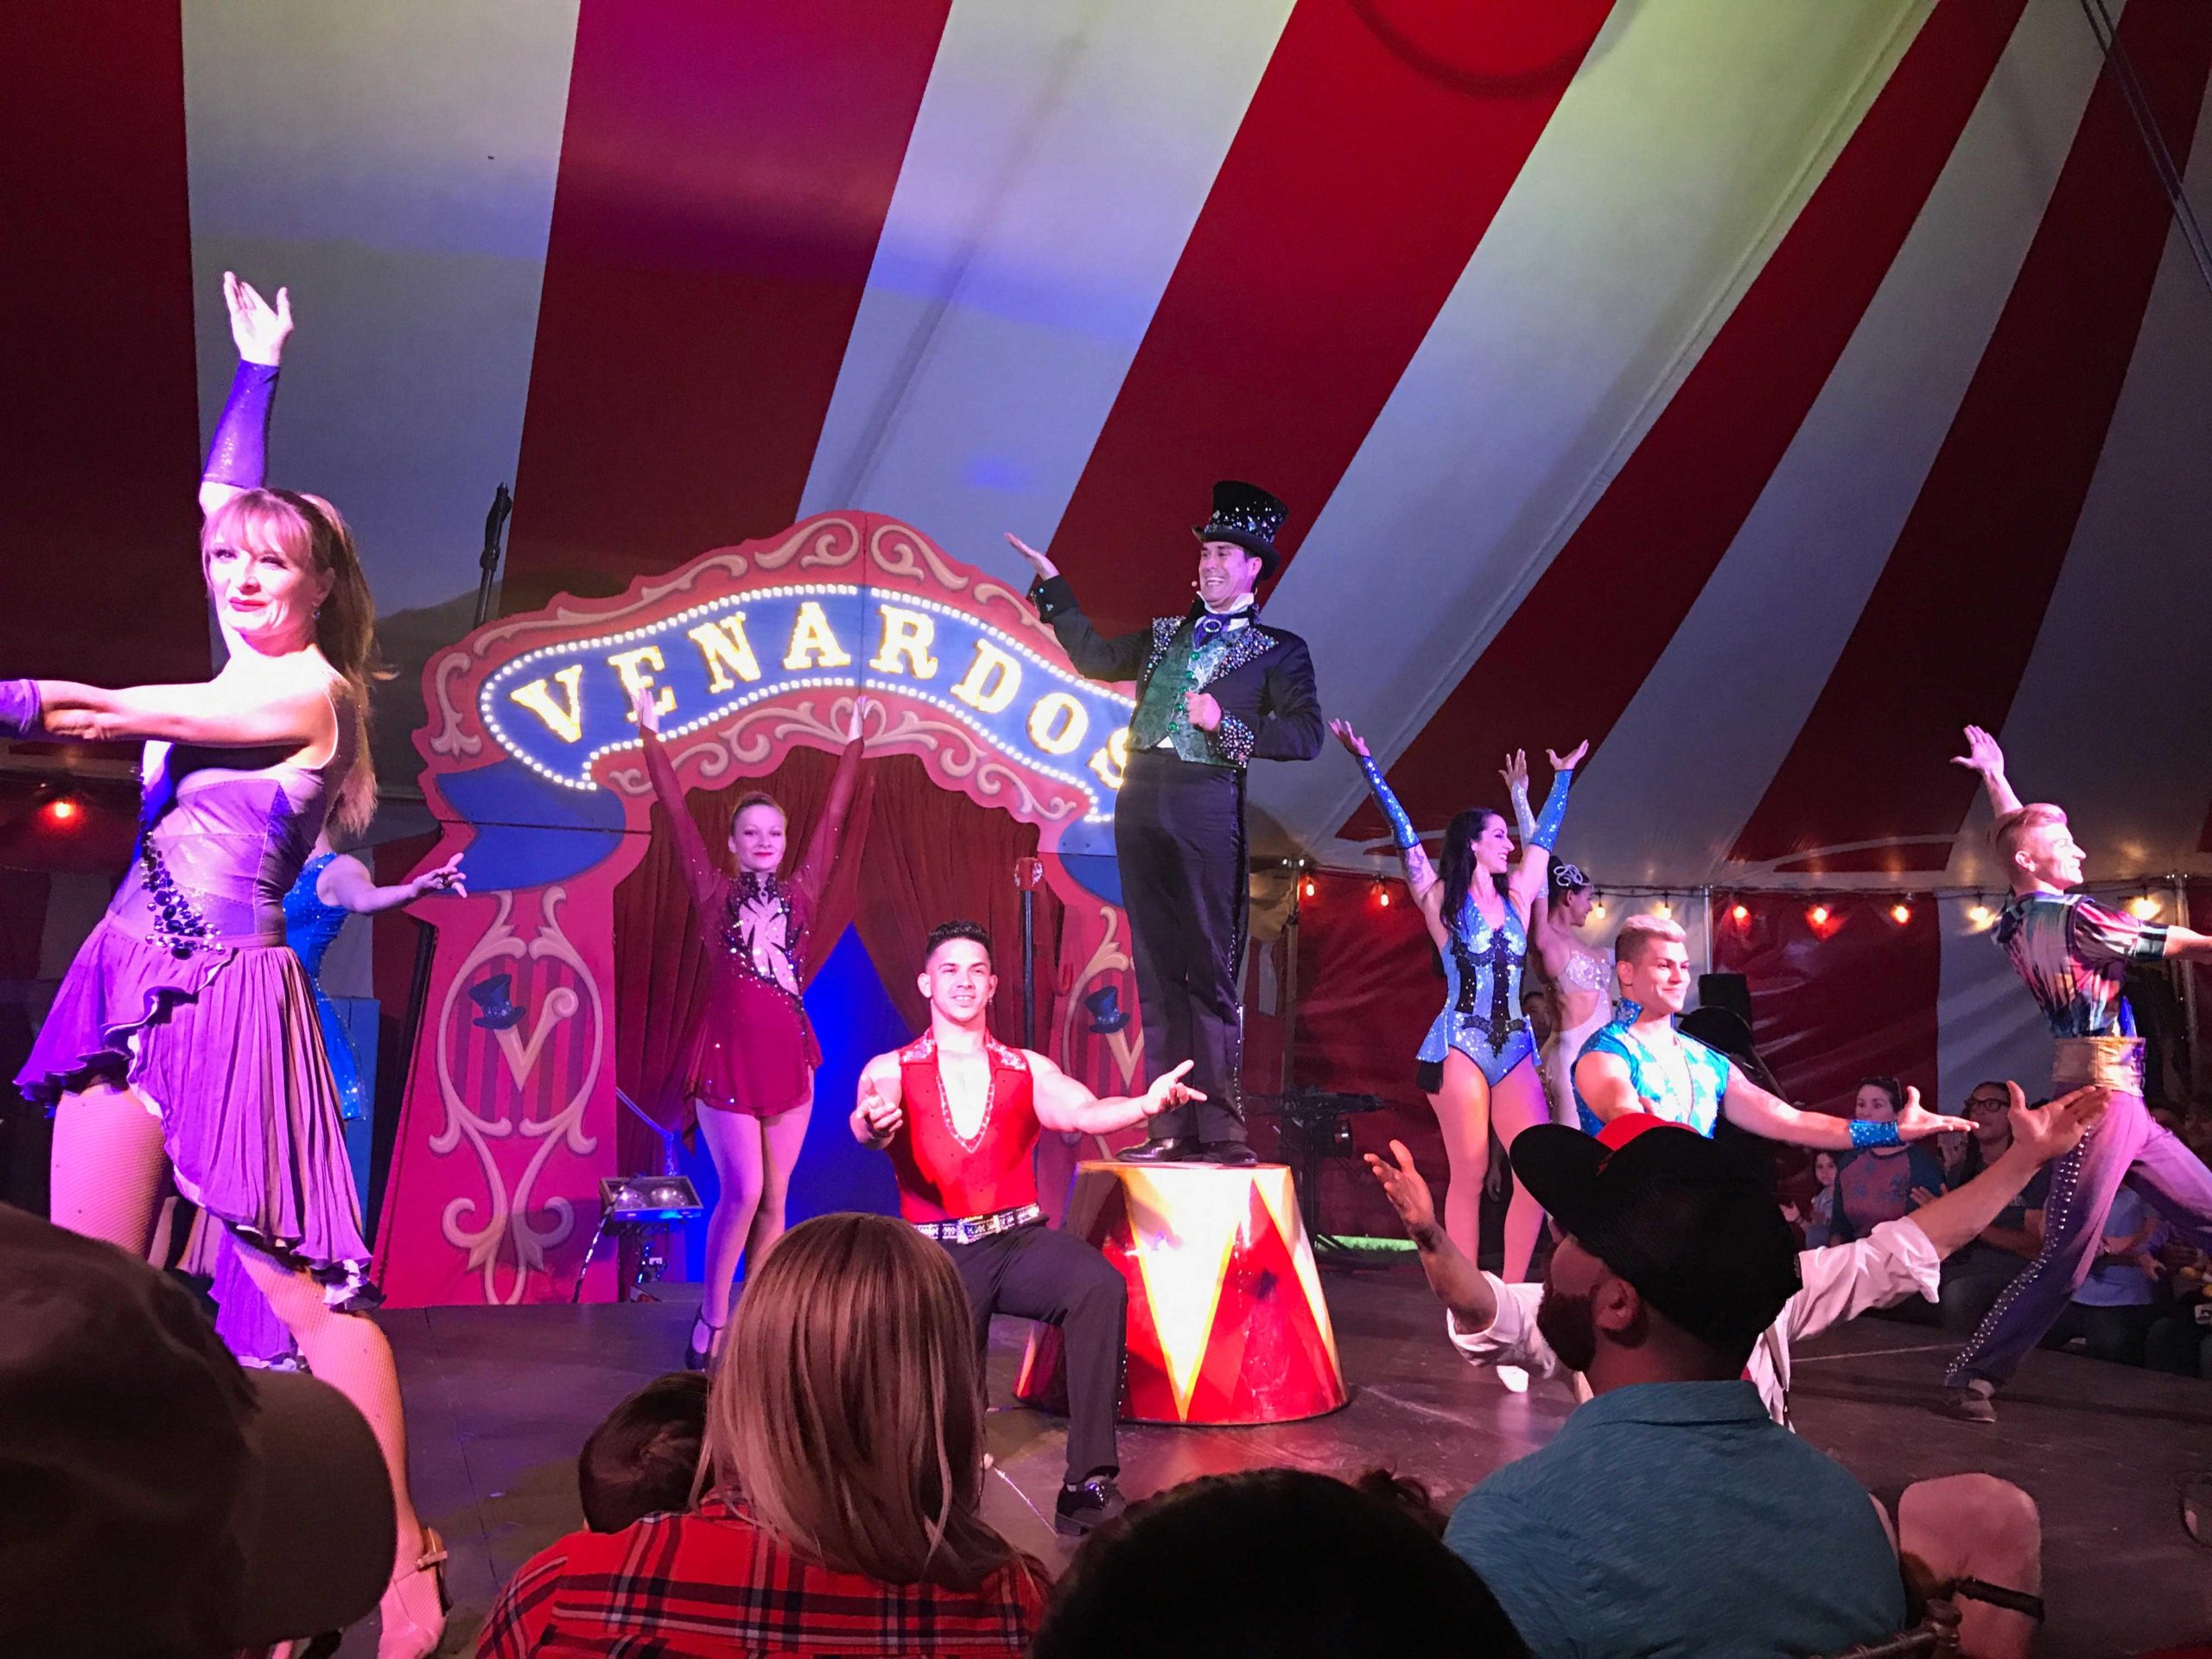 No animals at this circus - just human energy and imagination.Photo courtesy Vernardos Circus